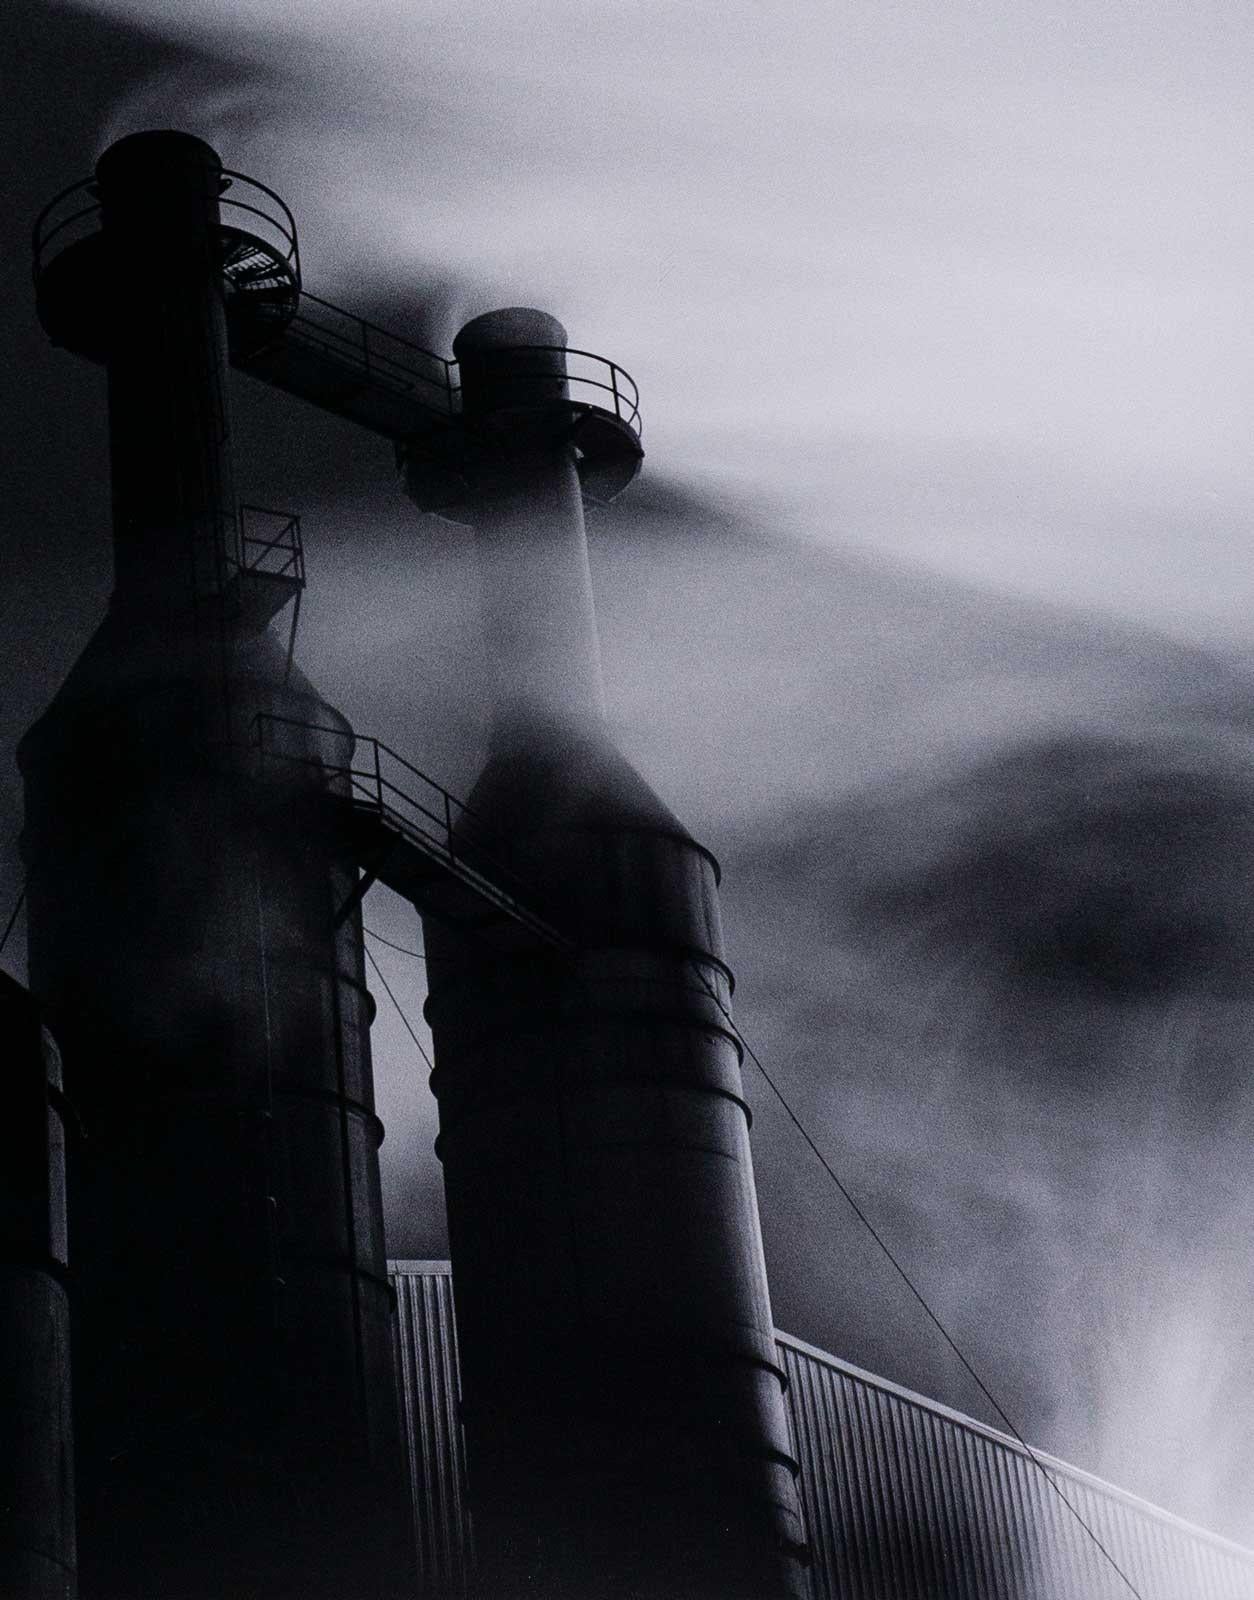 SMOKE STACKS, CAJUN MILL - Photograph by David Armentor